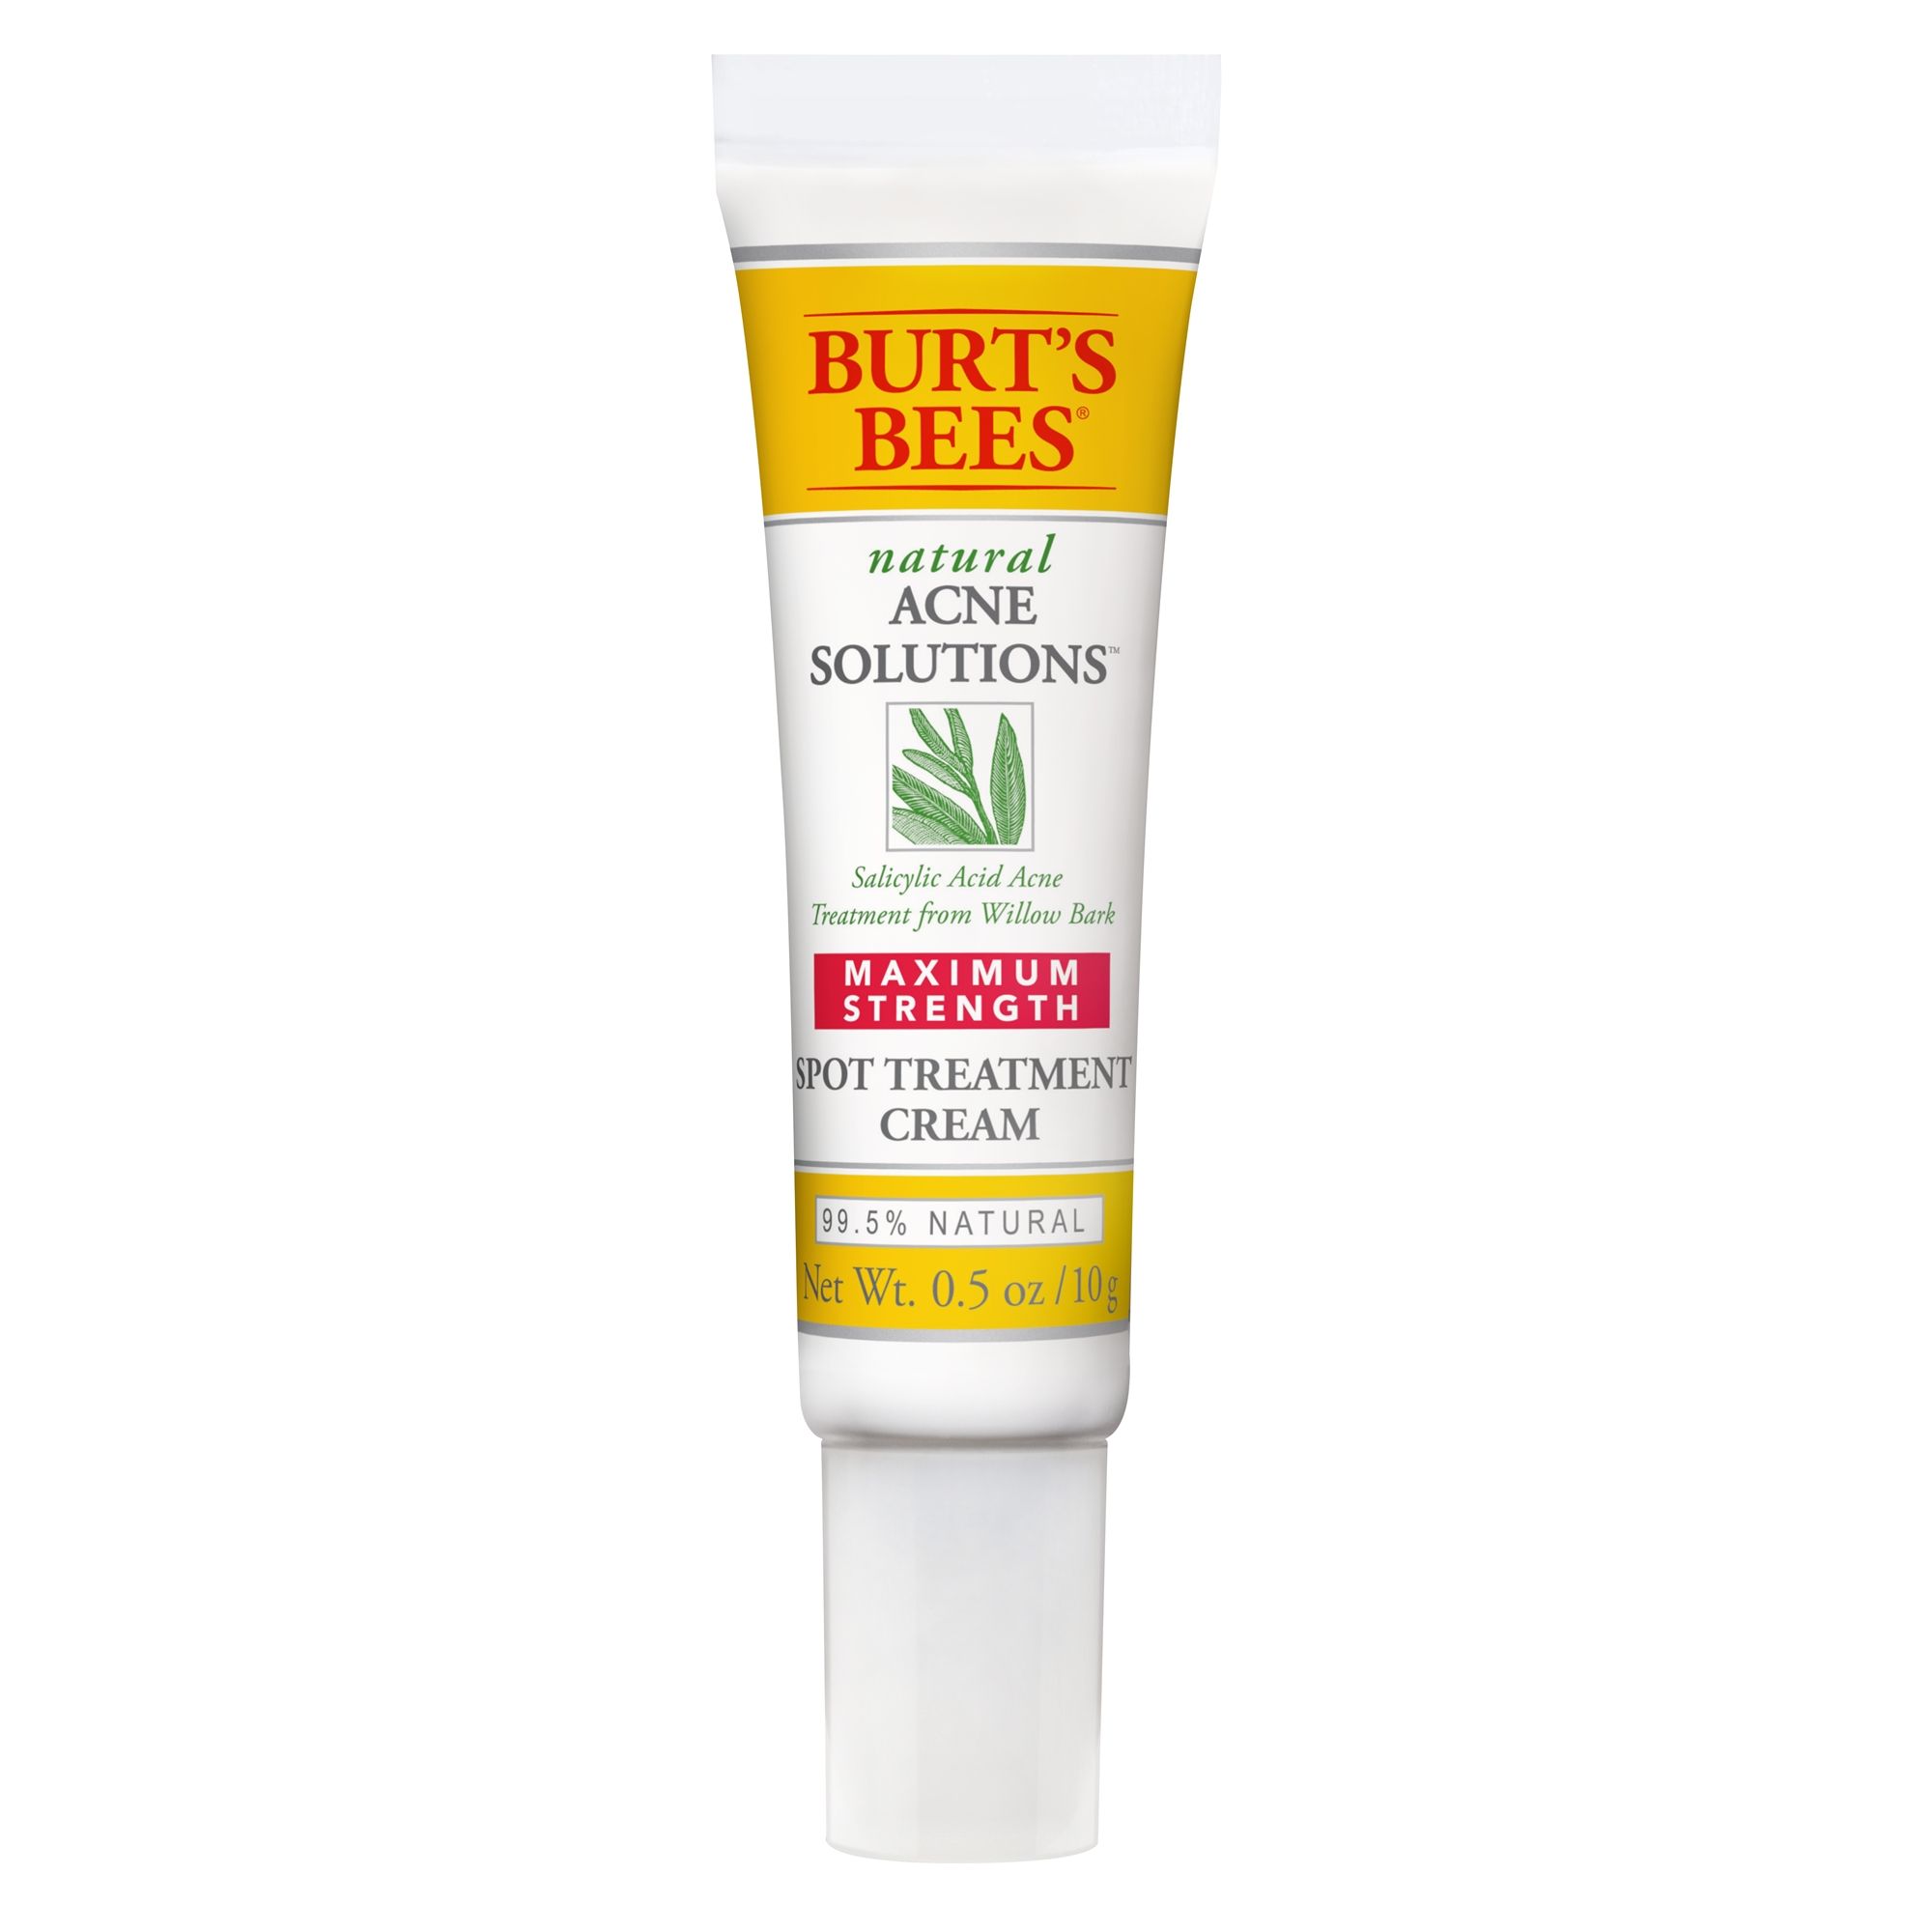 Burt’s Bees Natural Acne Solutions Spot Treatment Cream